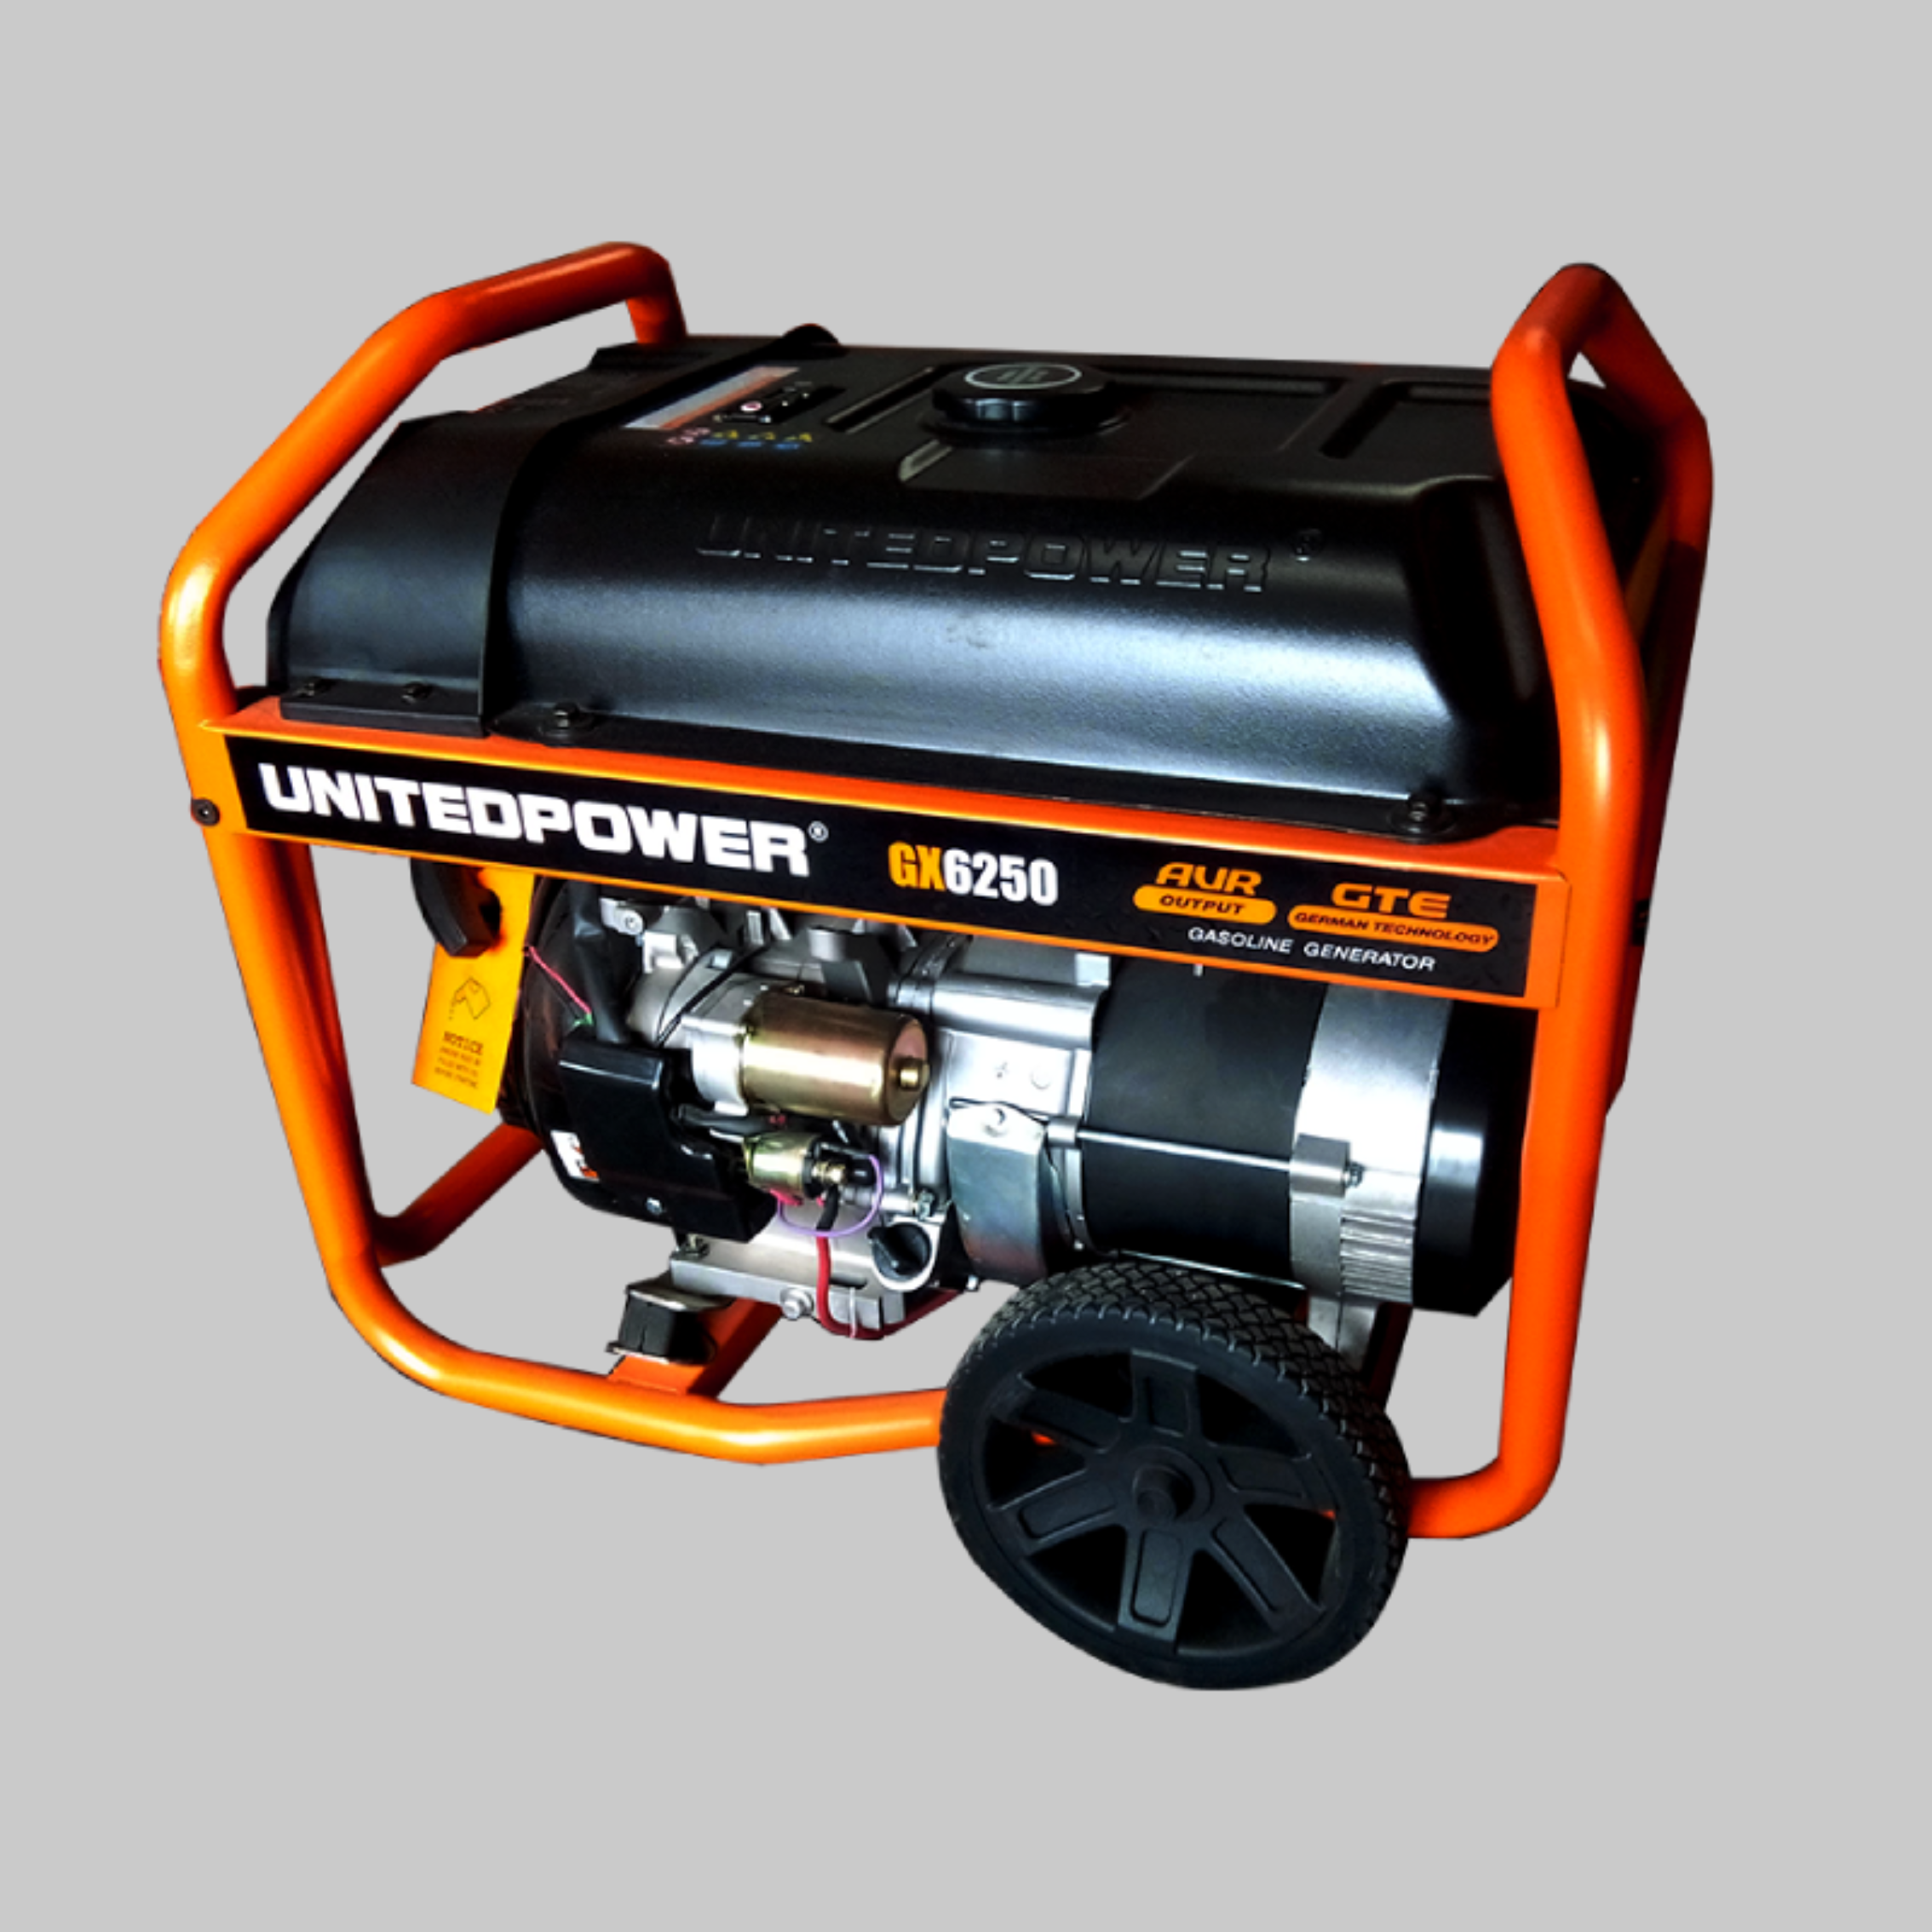 United Power Generator – Gasoline Series 5.5 KW (GX6250)